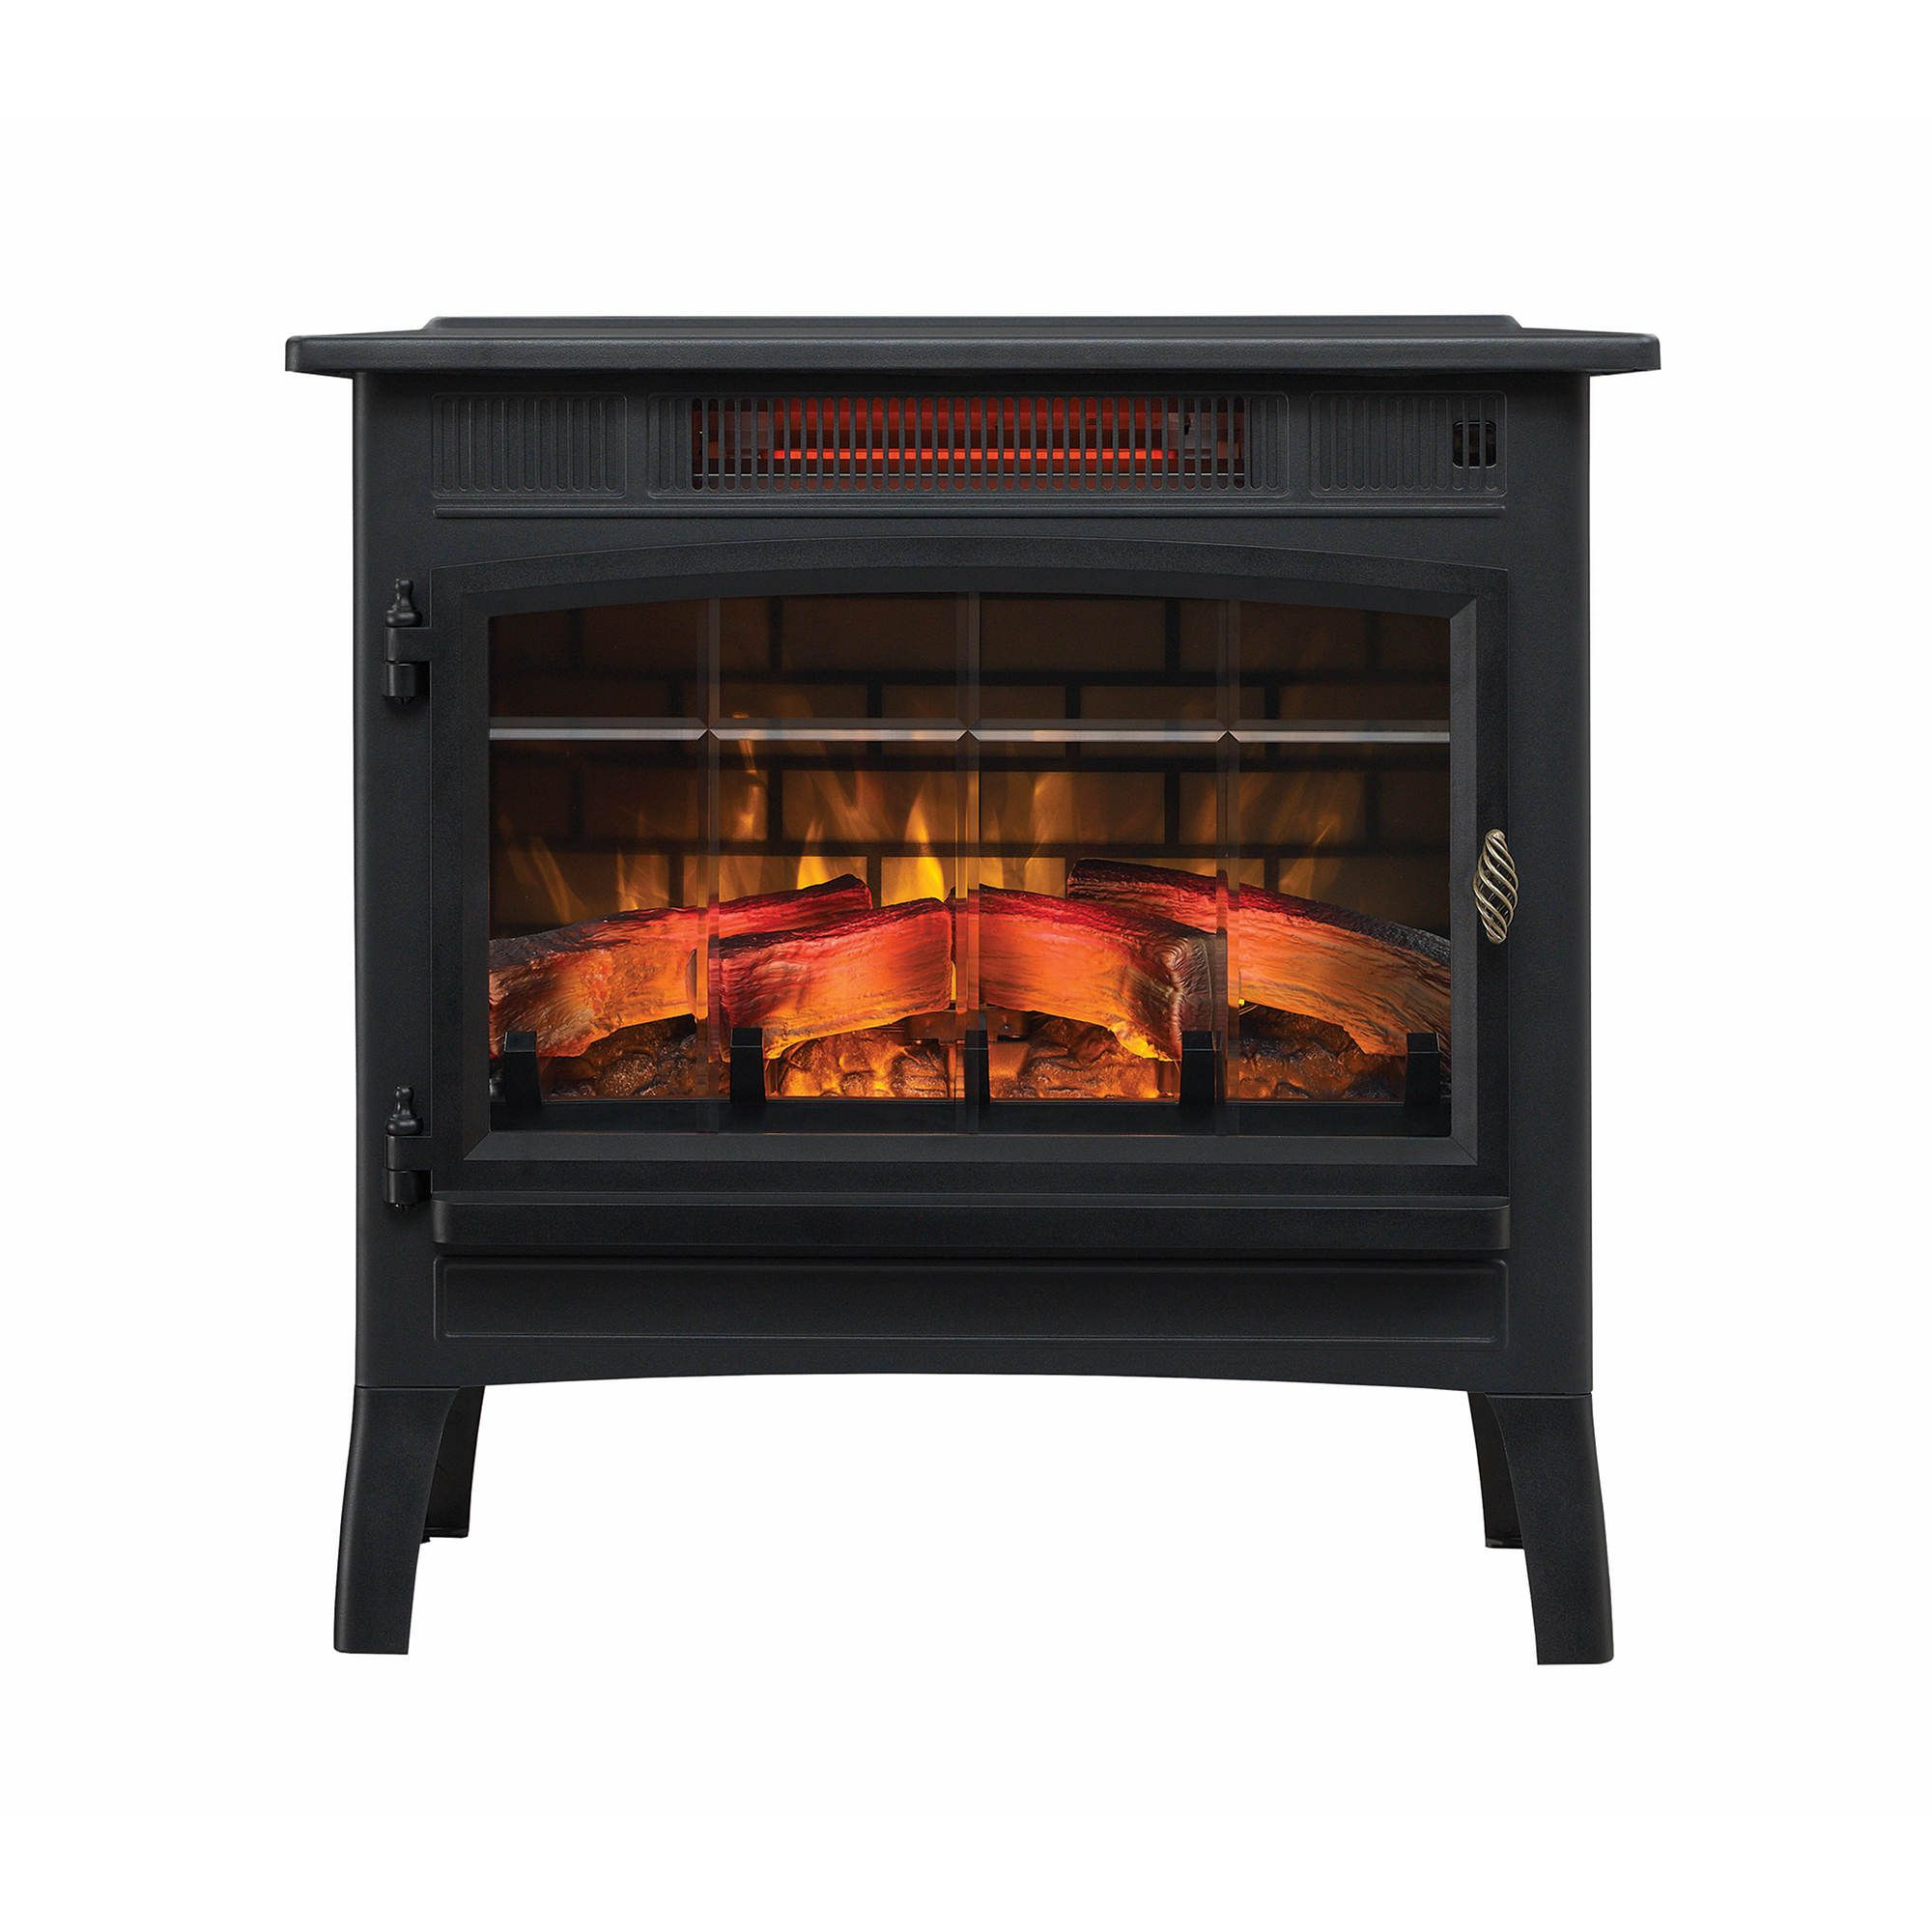 Bjs Electric Fireplace
 Duraflame 5 200 BTU Infrared Quartz Stove with 3D Flame